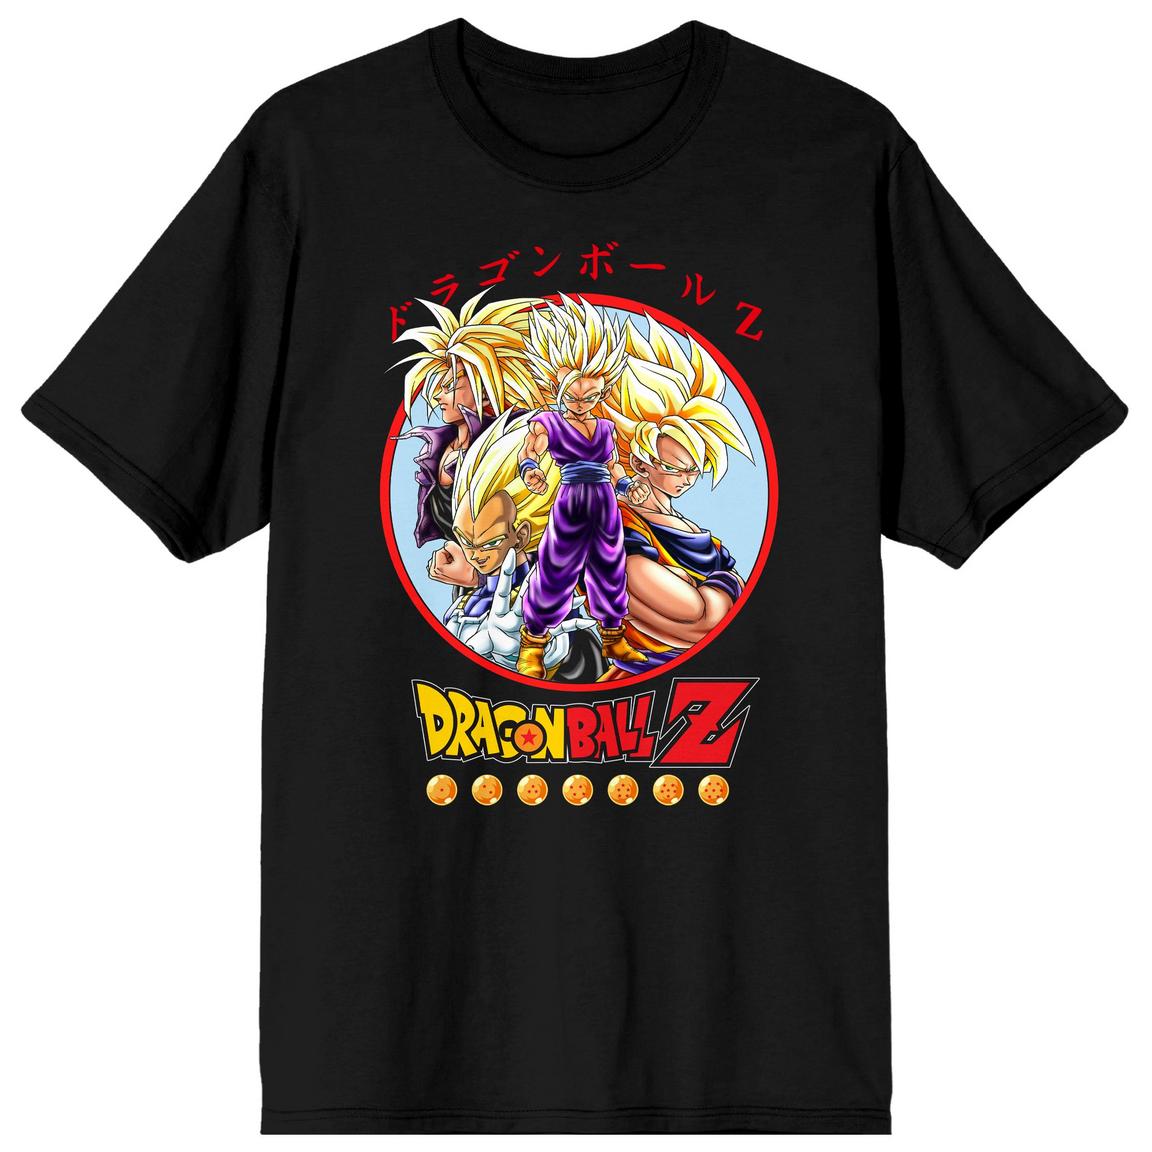 Dragon Ball Z Anime Characters Group Shot Men's Black Short Sleeve Graphic T-Shirt, Size: Small, Bioworld Merchandising